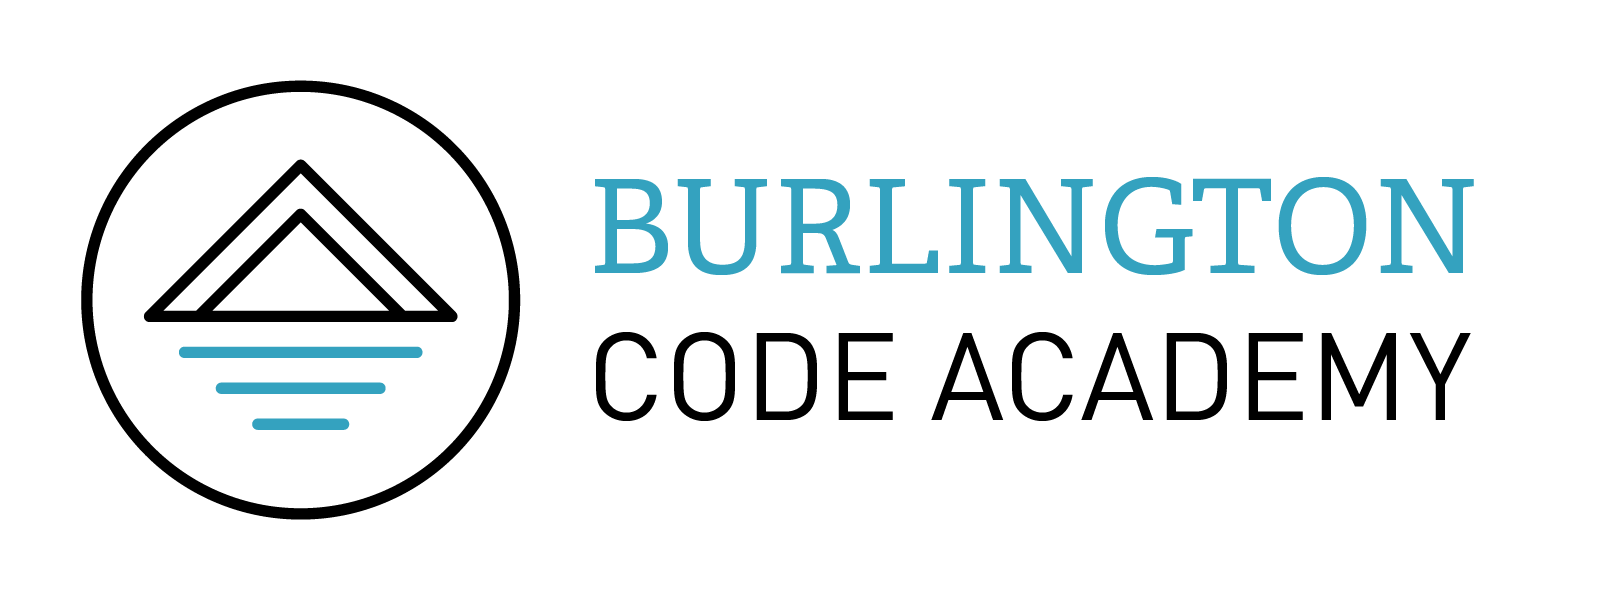 Burlingtion Logo - Burlington Code Academy Bootcamp. Learn To Code